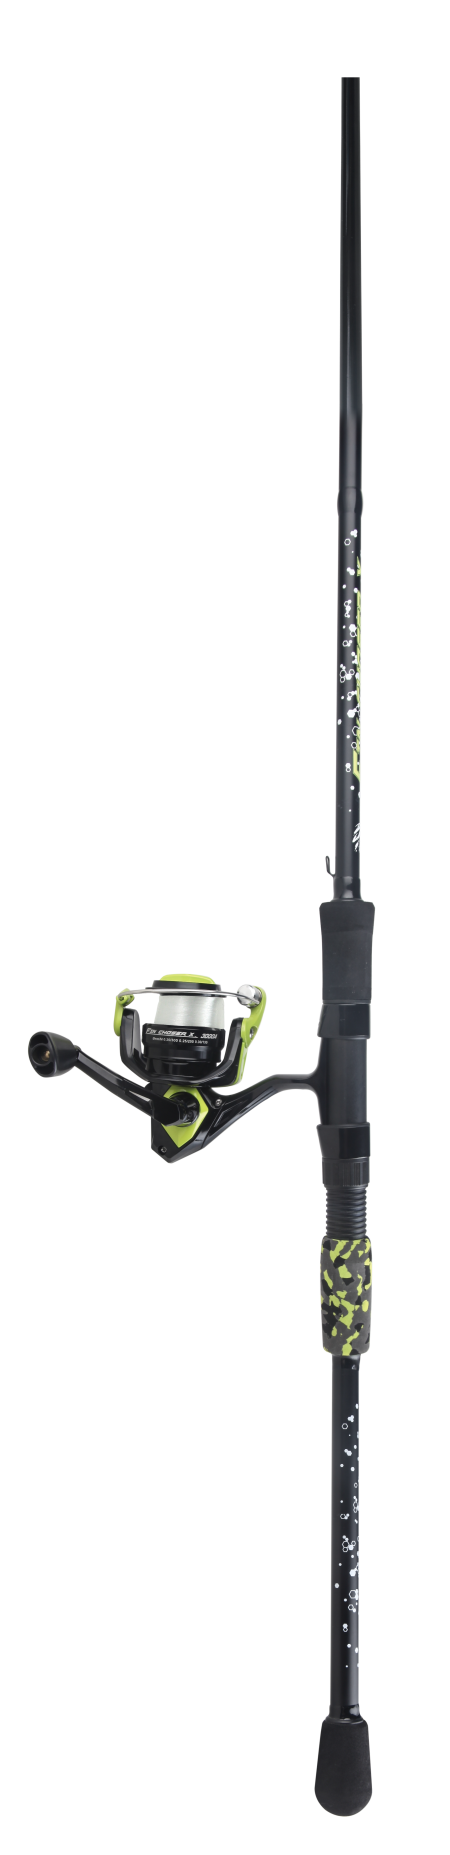 Fin Chaser X Series Combos (NEW)  OKUMA Fishing Rods and Reels - OKUMA  FISHING TACKLE CO., LTD.